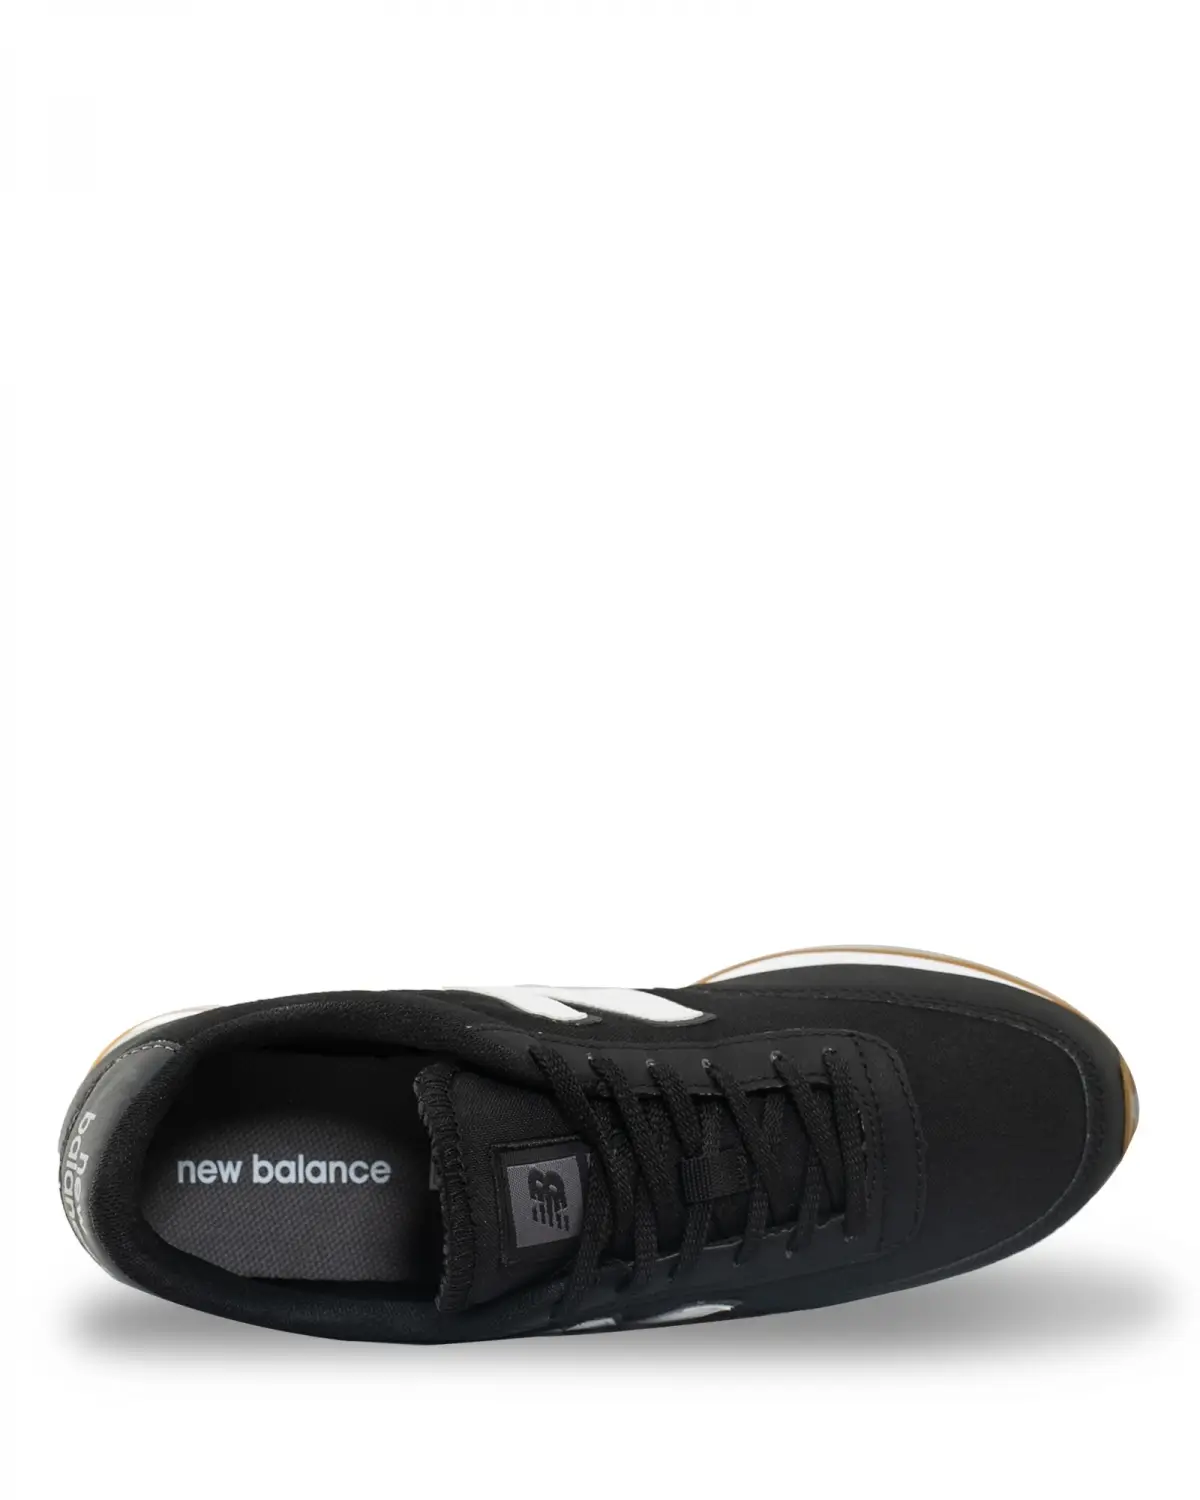 NEW BALANCE  Lifestyle Mens Shoes Siyah Erkek Günlük Ayakkabı - U410BNP